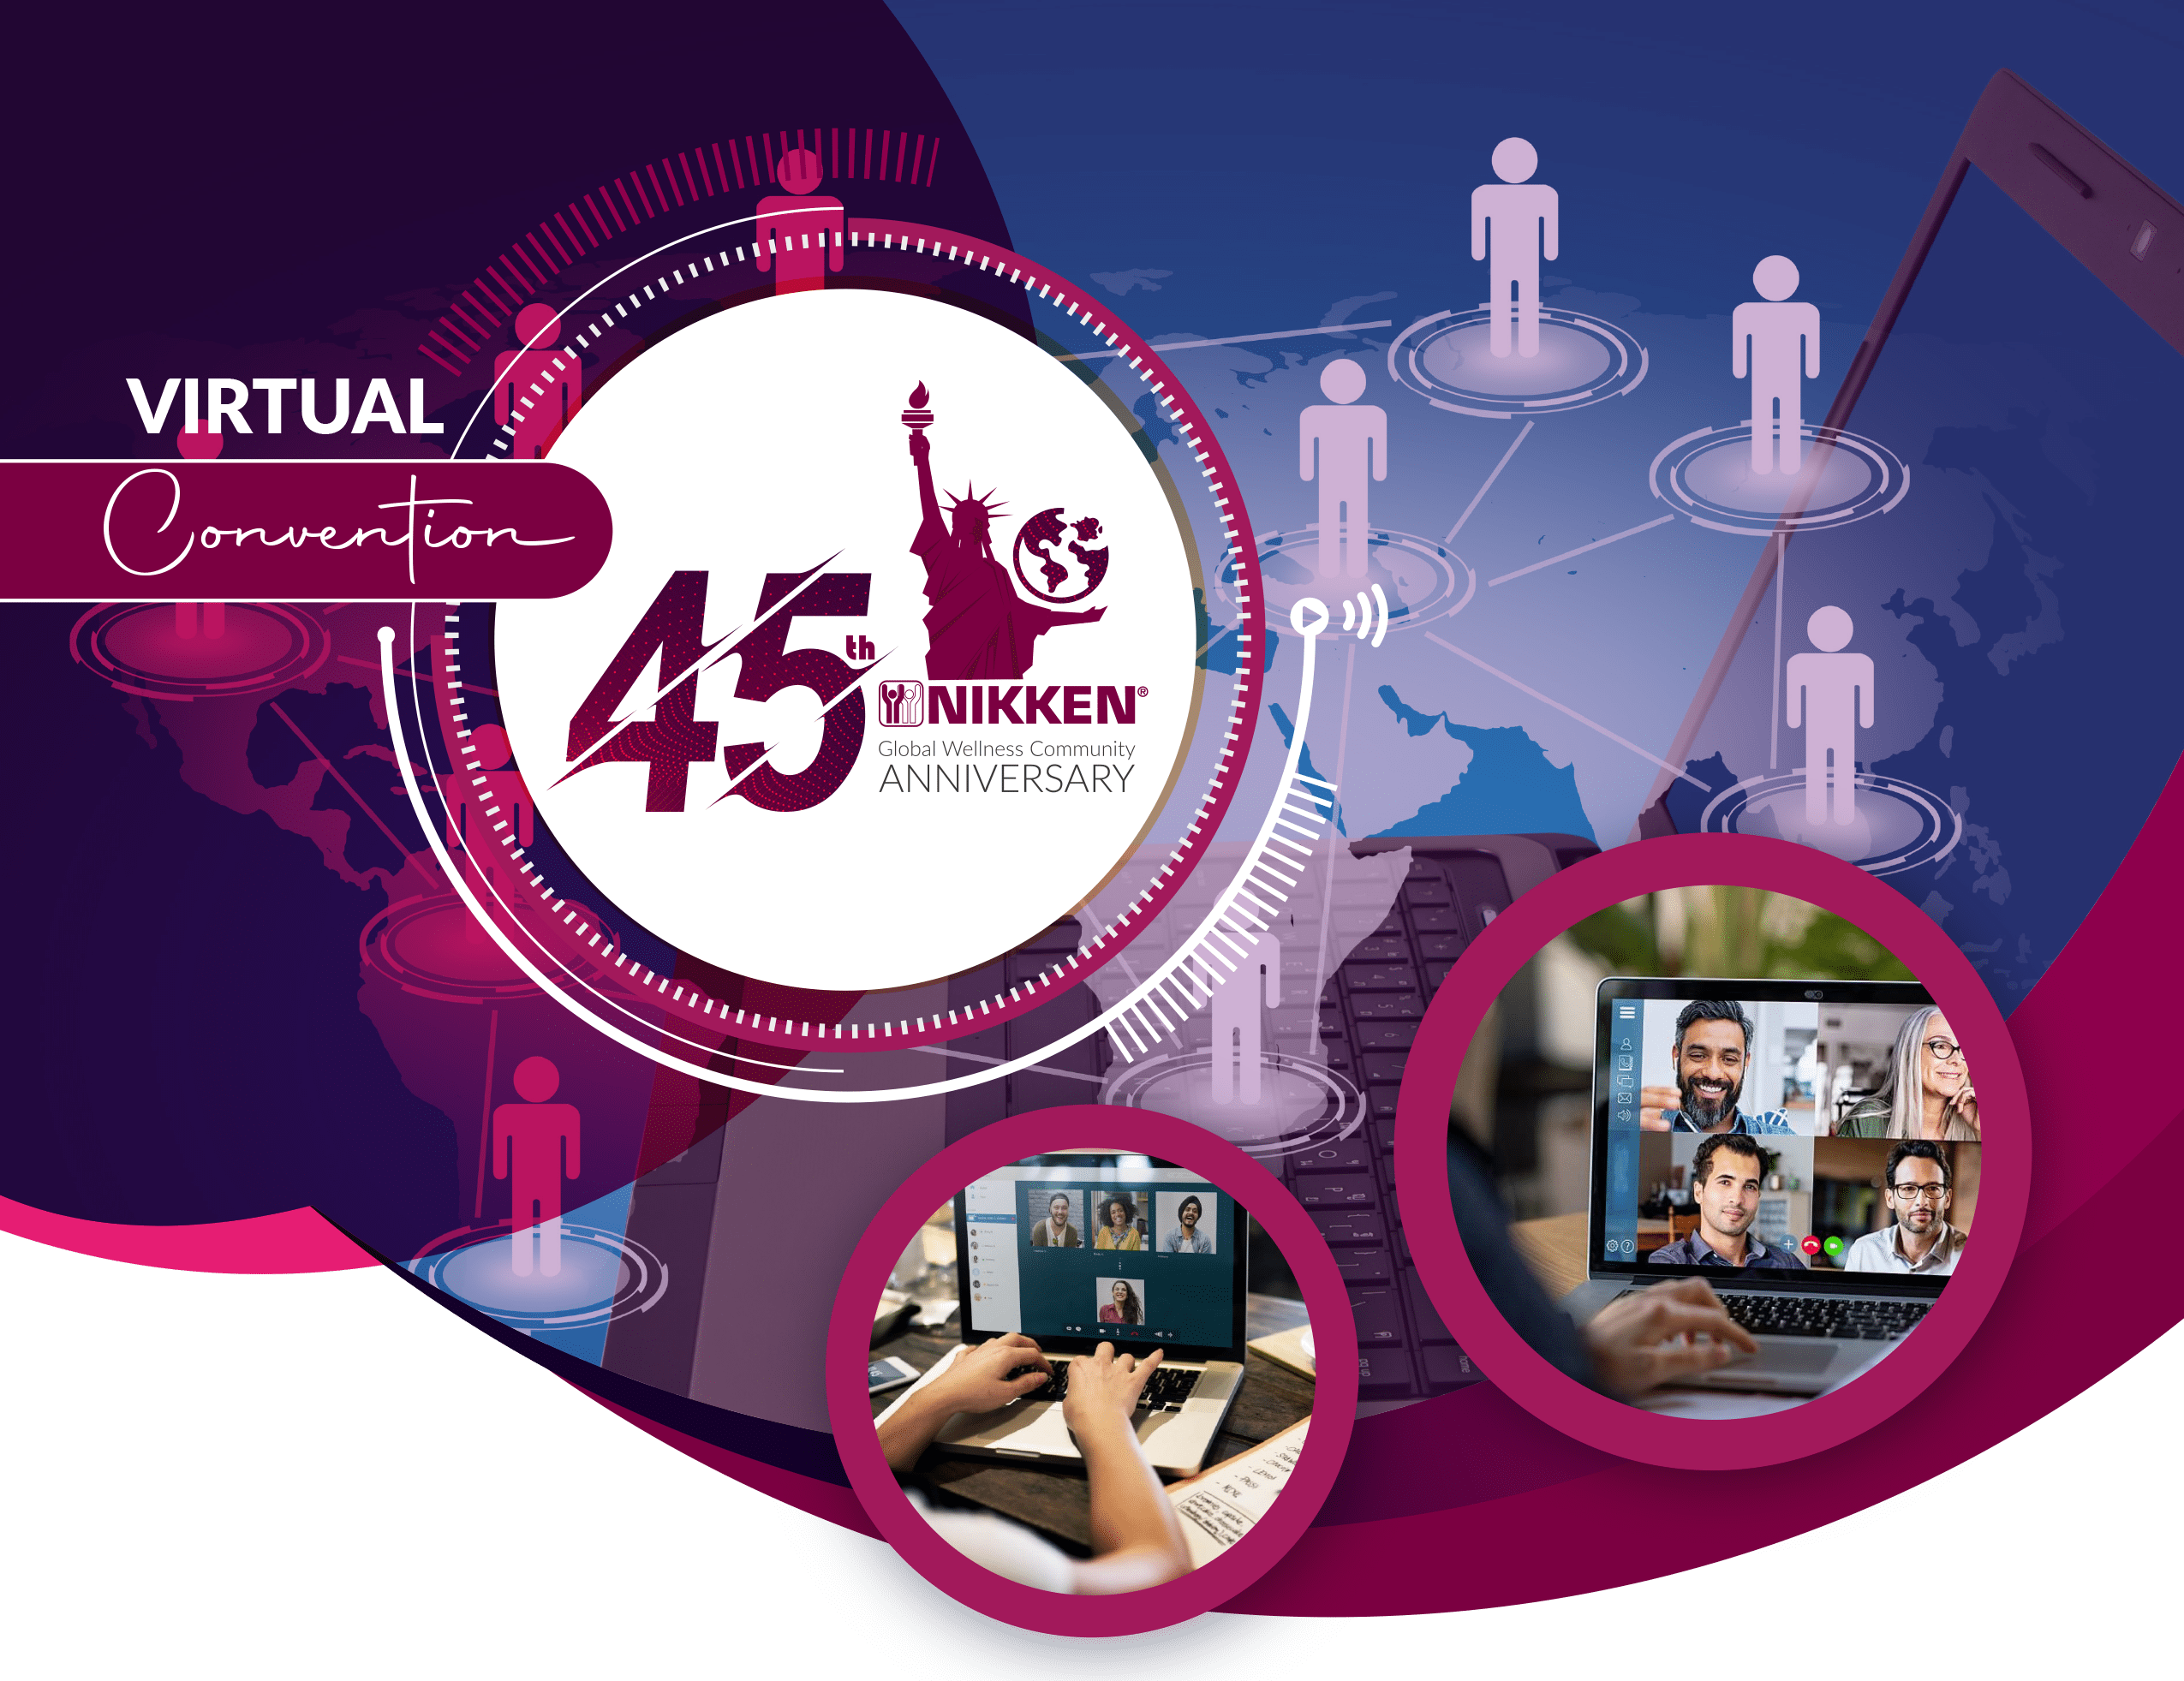 Virtual Convention - NIKKEN 45th Anniversary!